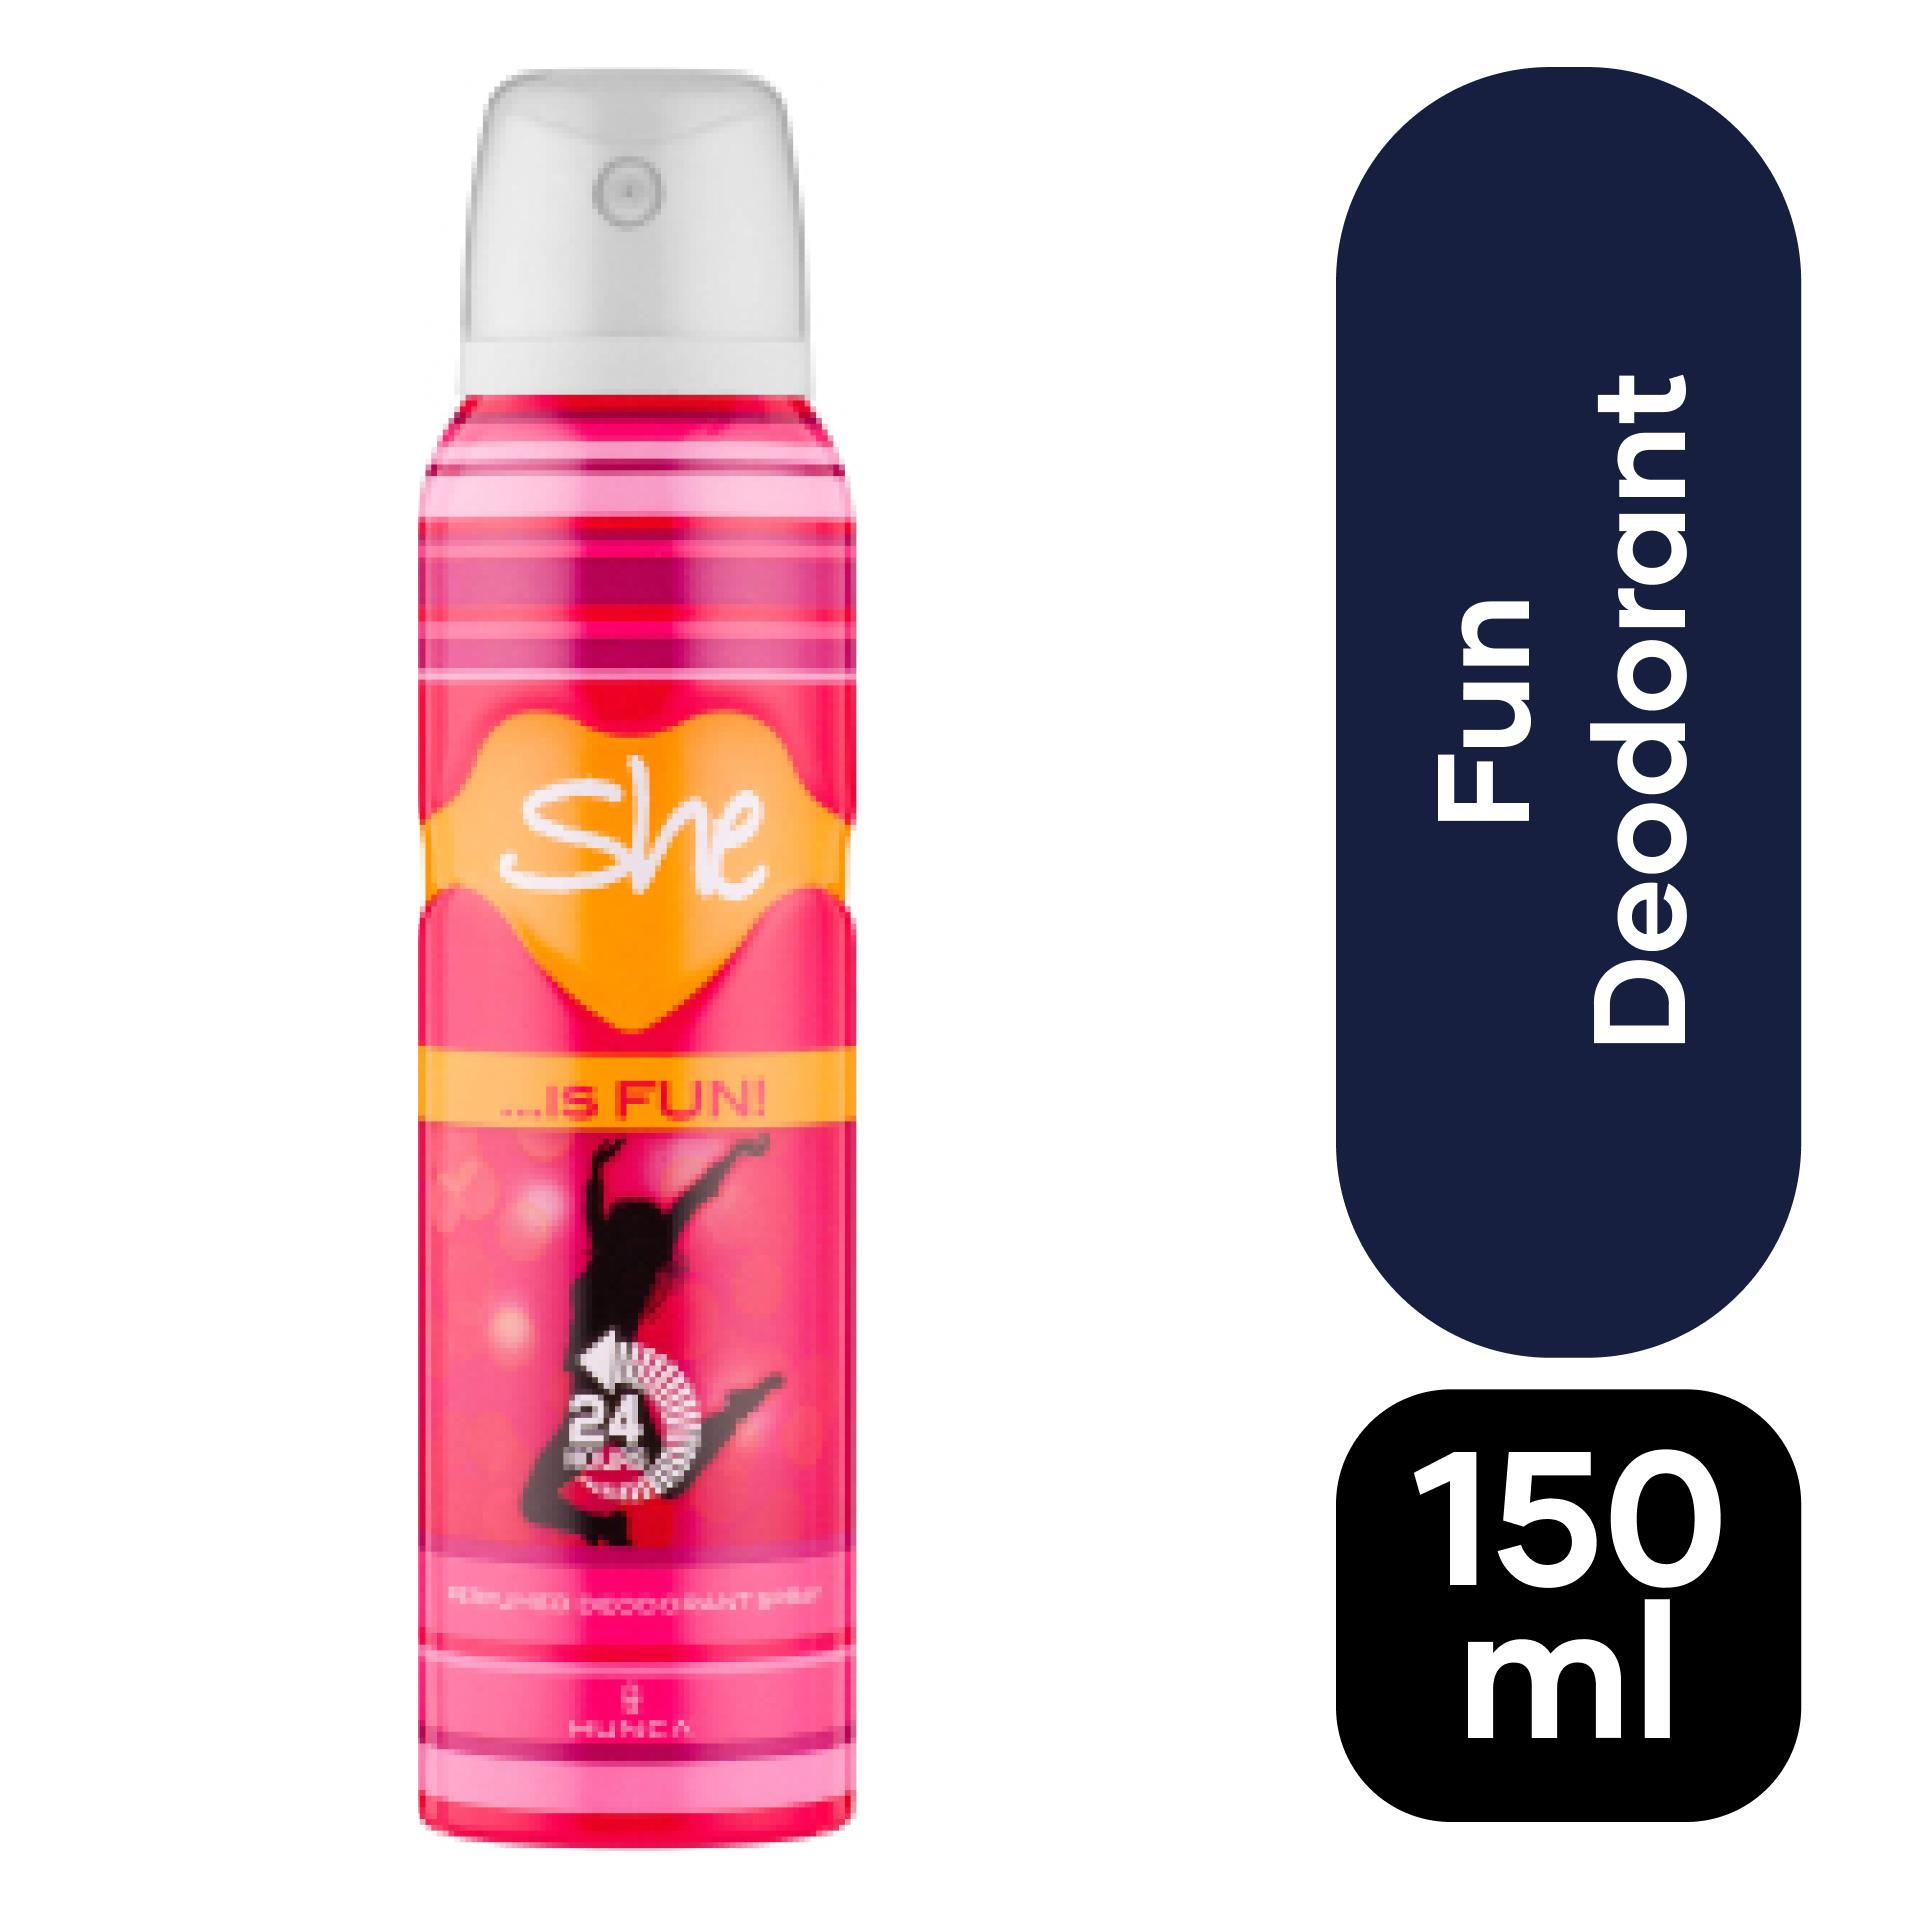 She Deodorant For Women Is Fun 150 ml